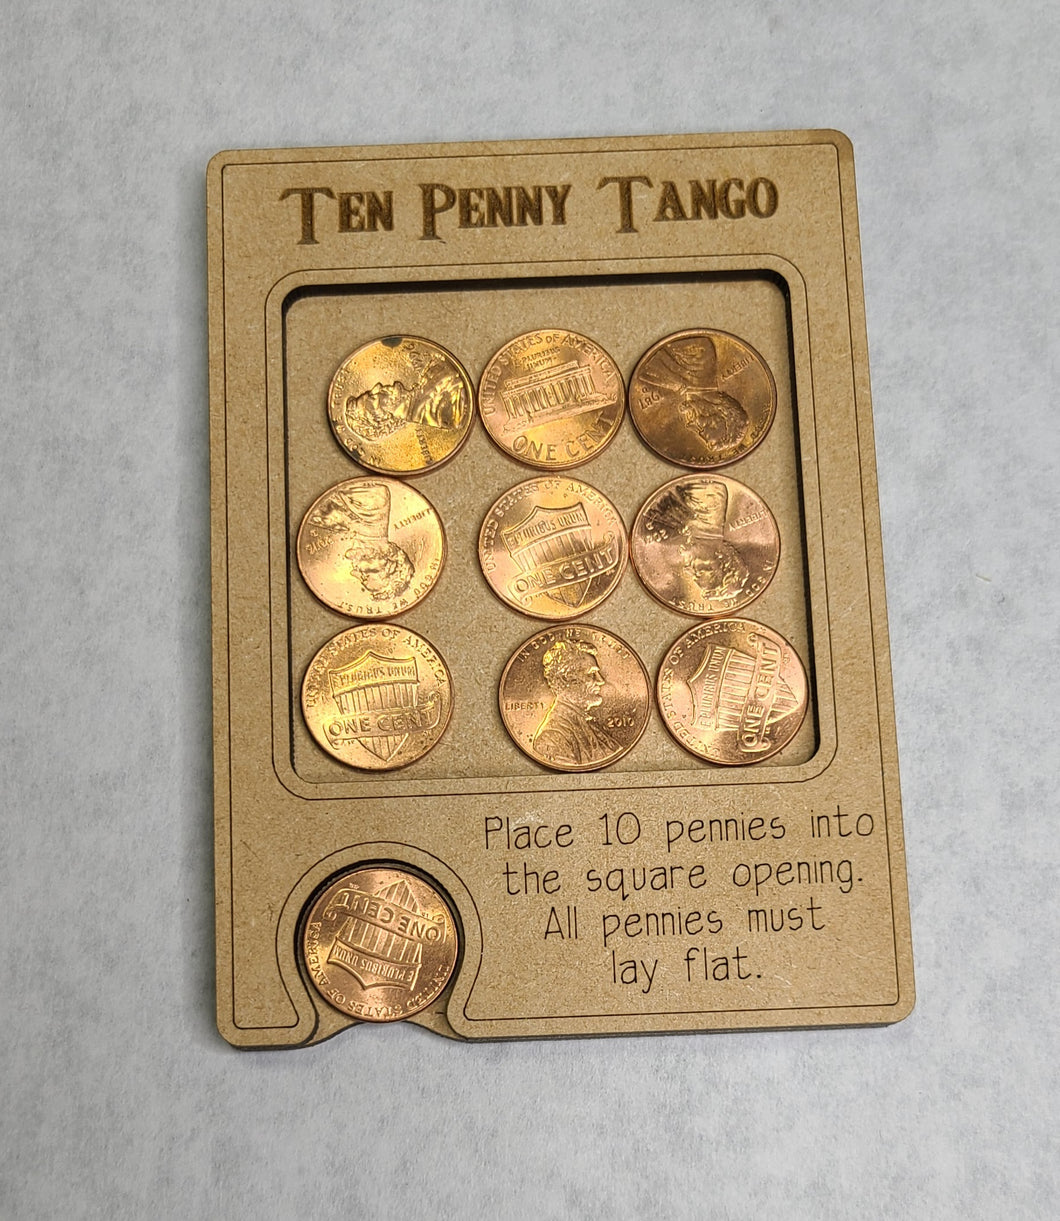 Ten Penny Tango